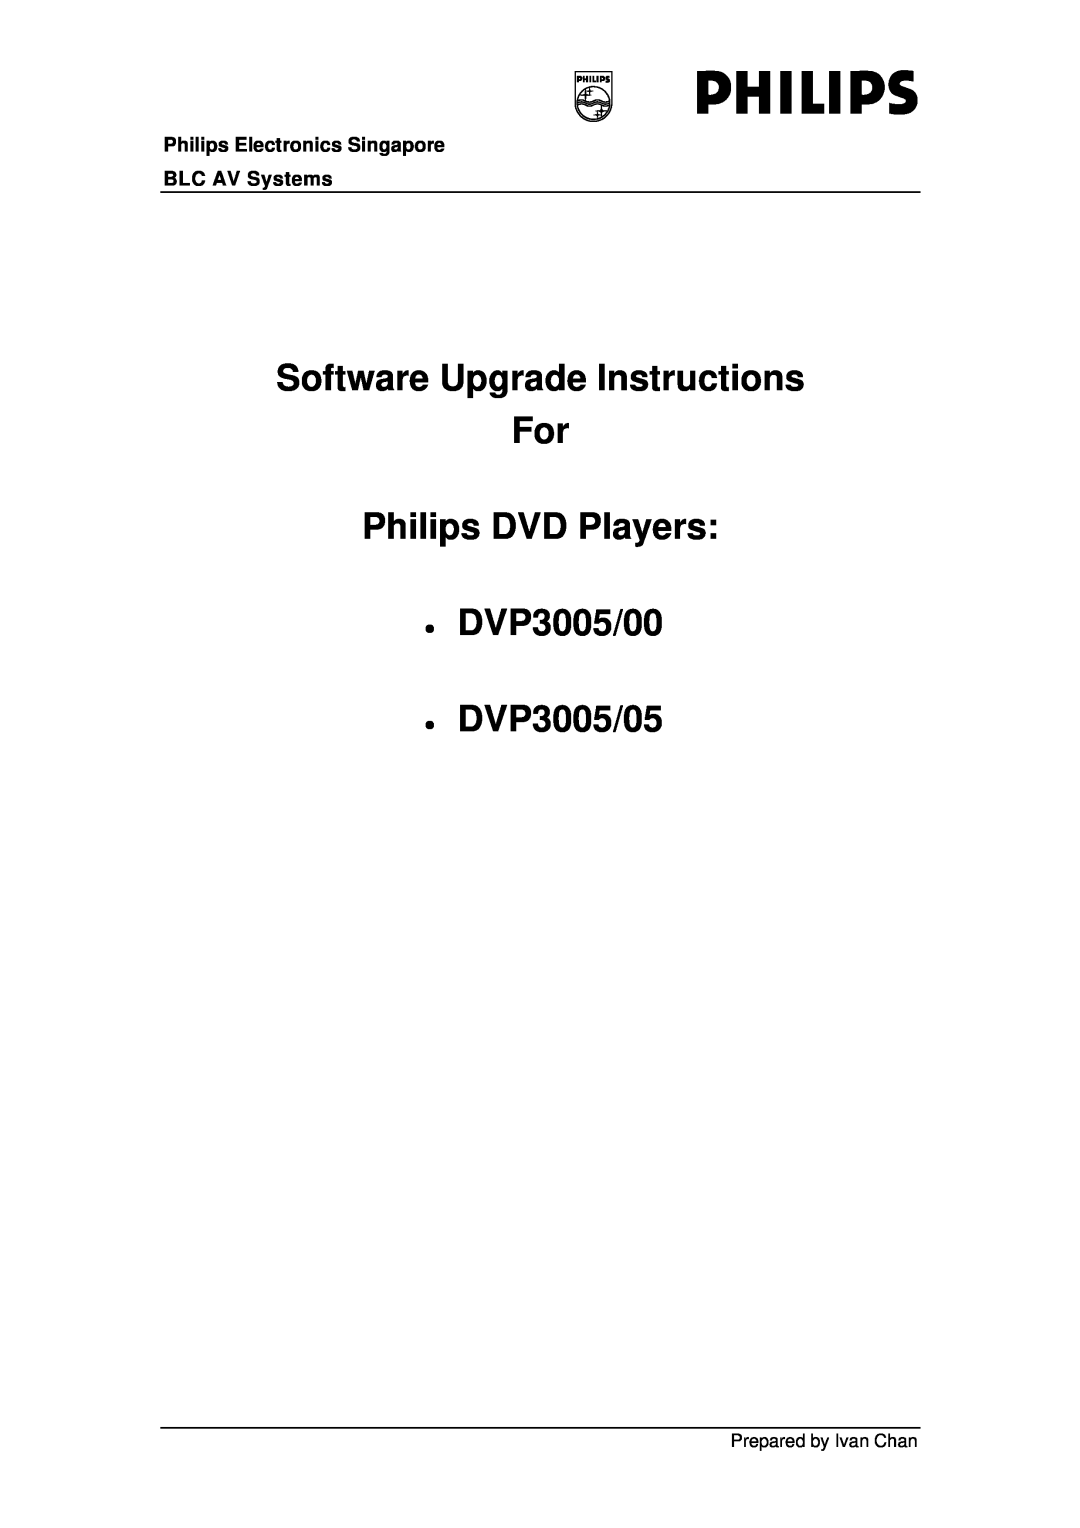 Philips DVP3005/00 manual Philips Electronics Singapore BLC AV Systems, DVP3005/05, Prepared by Ivan Chan 